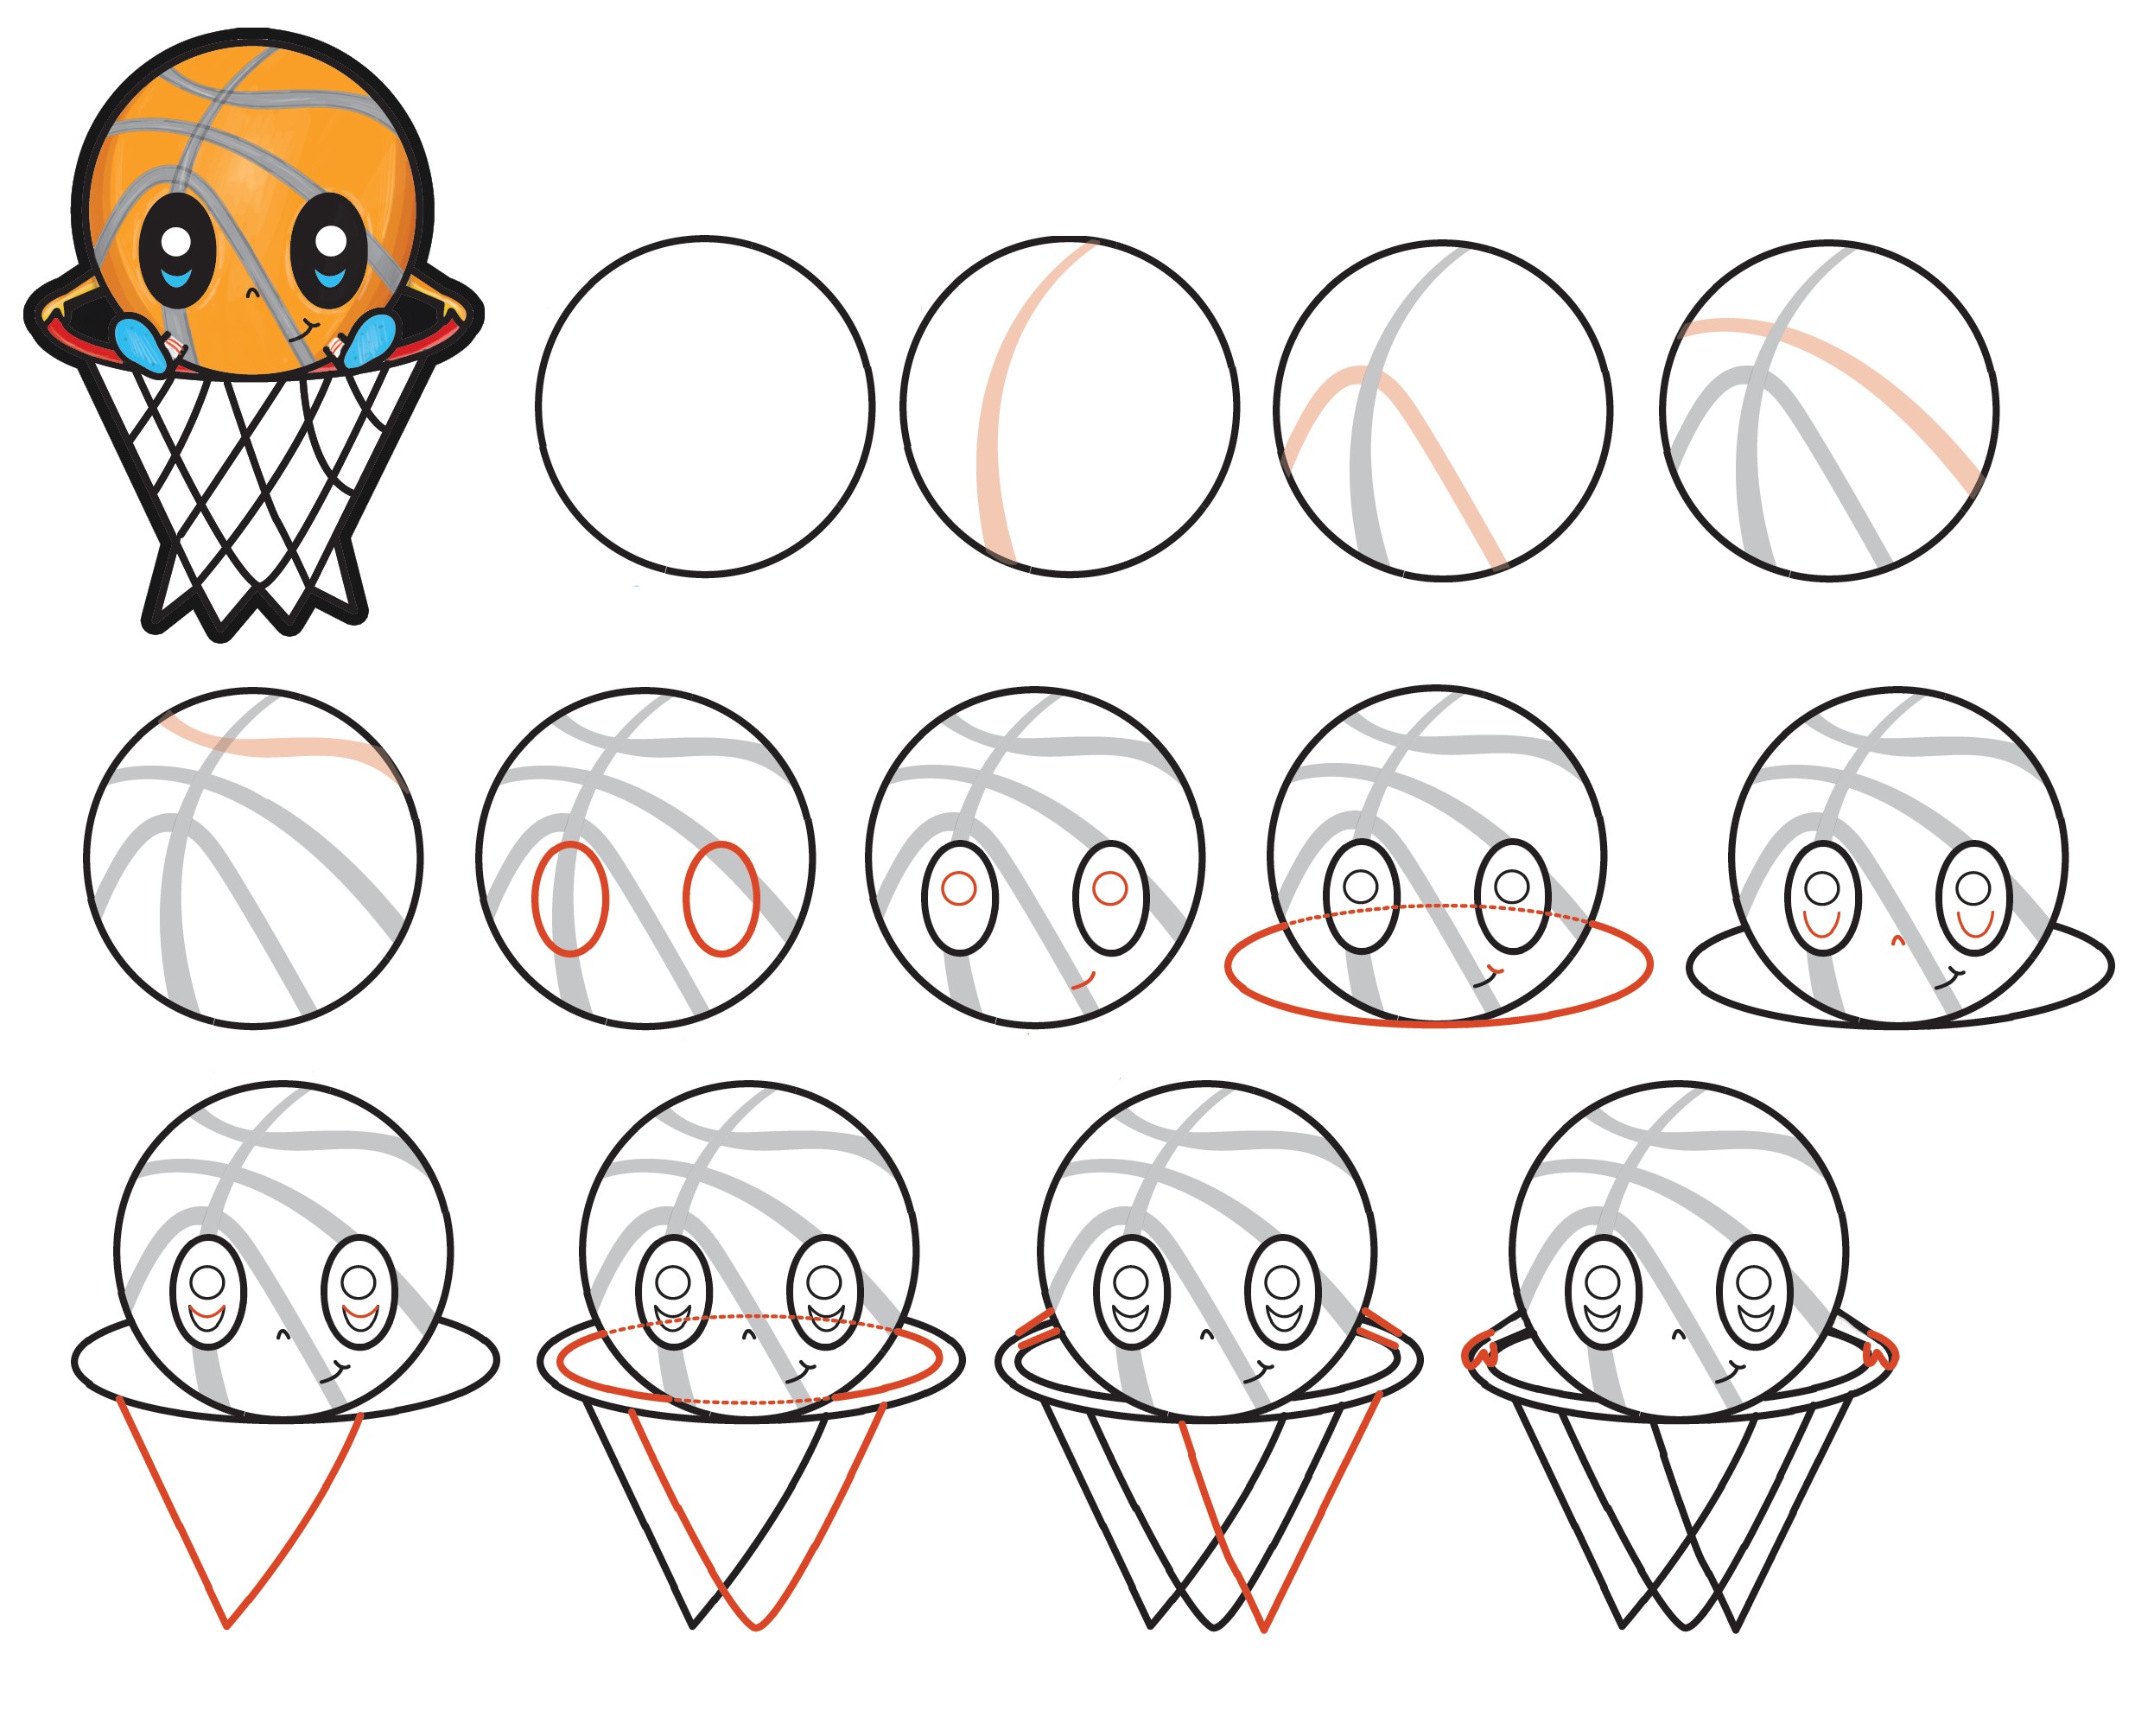 How to draw Cartoon basketball